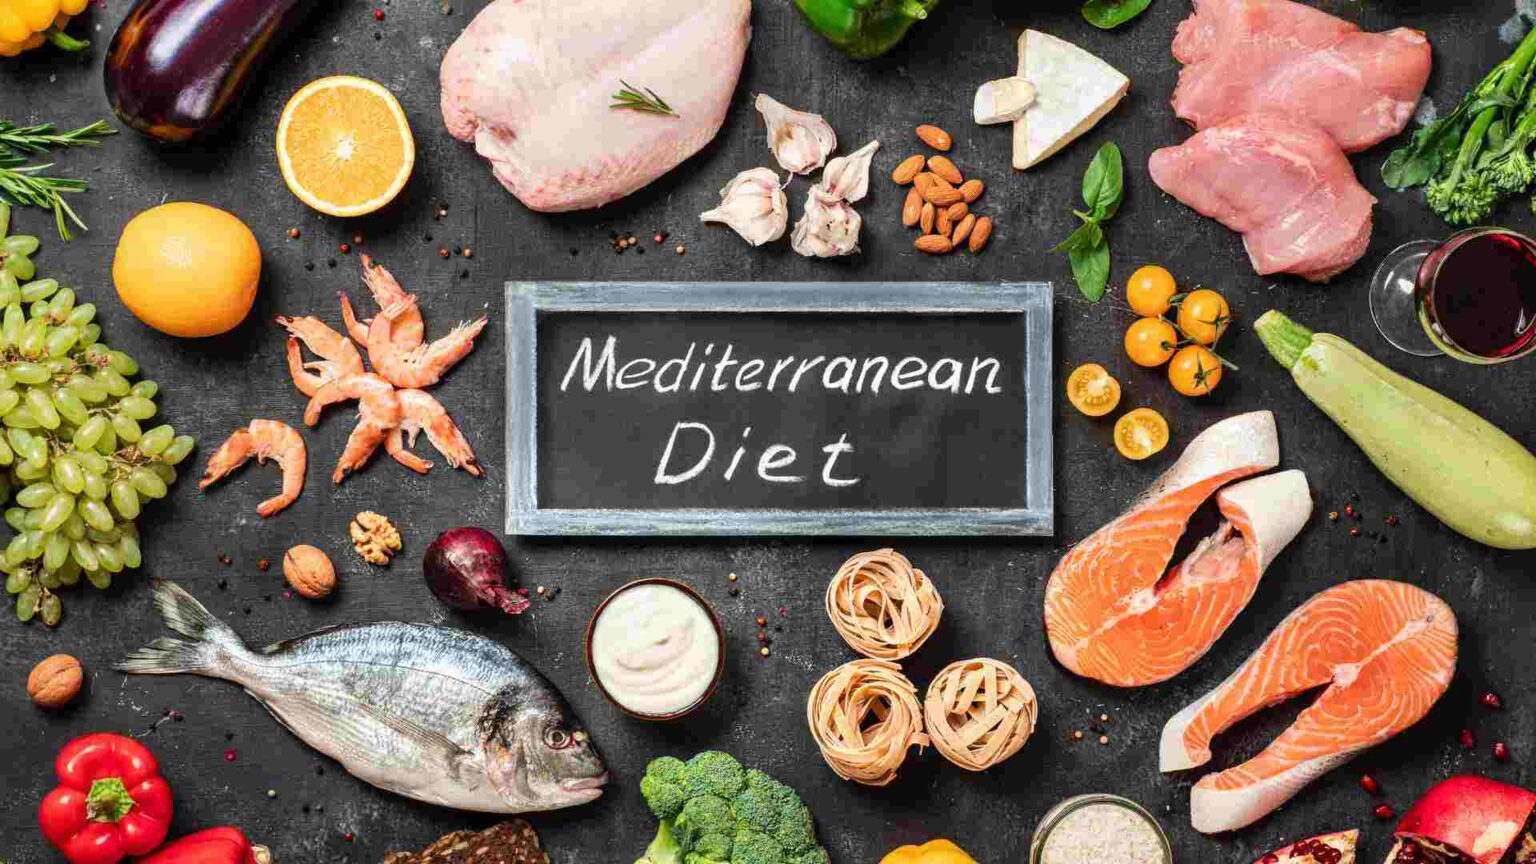 Mediterranean Diet: Complete Scientific Guide and Meal Plan